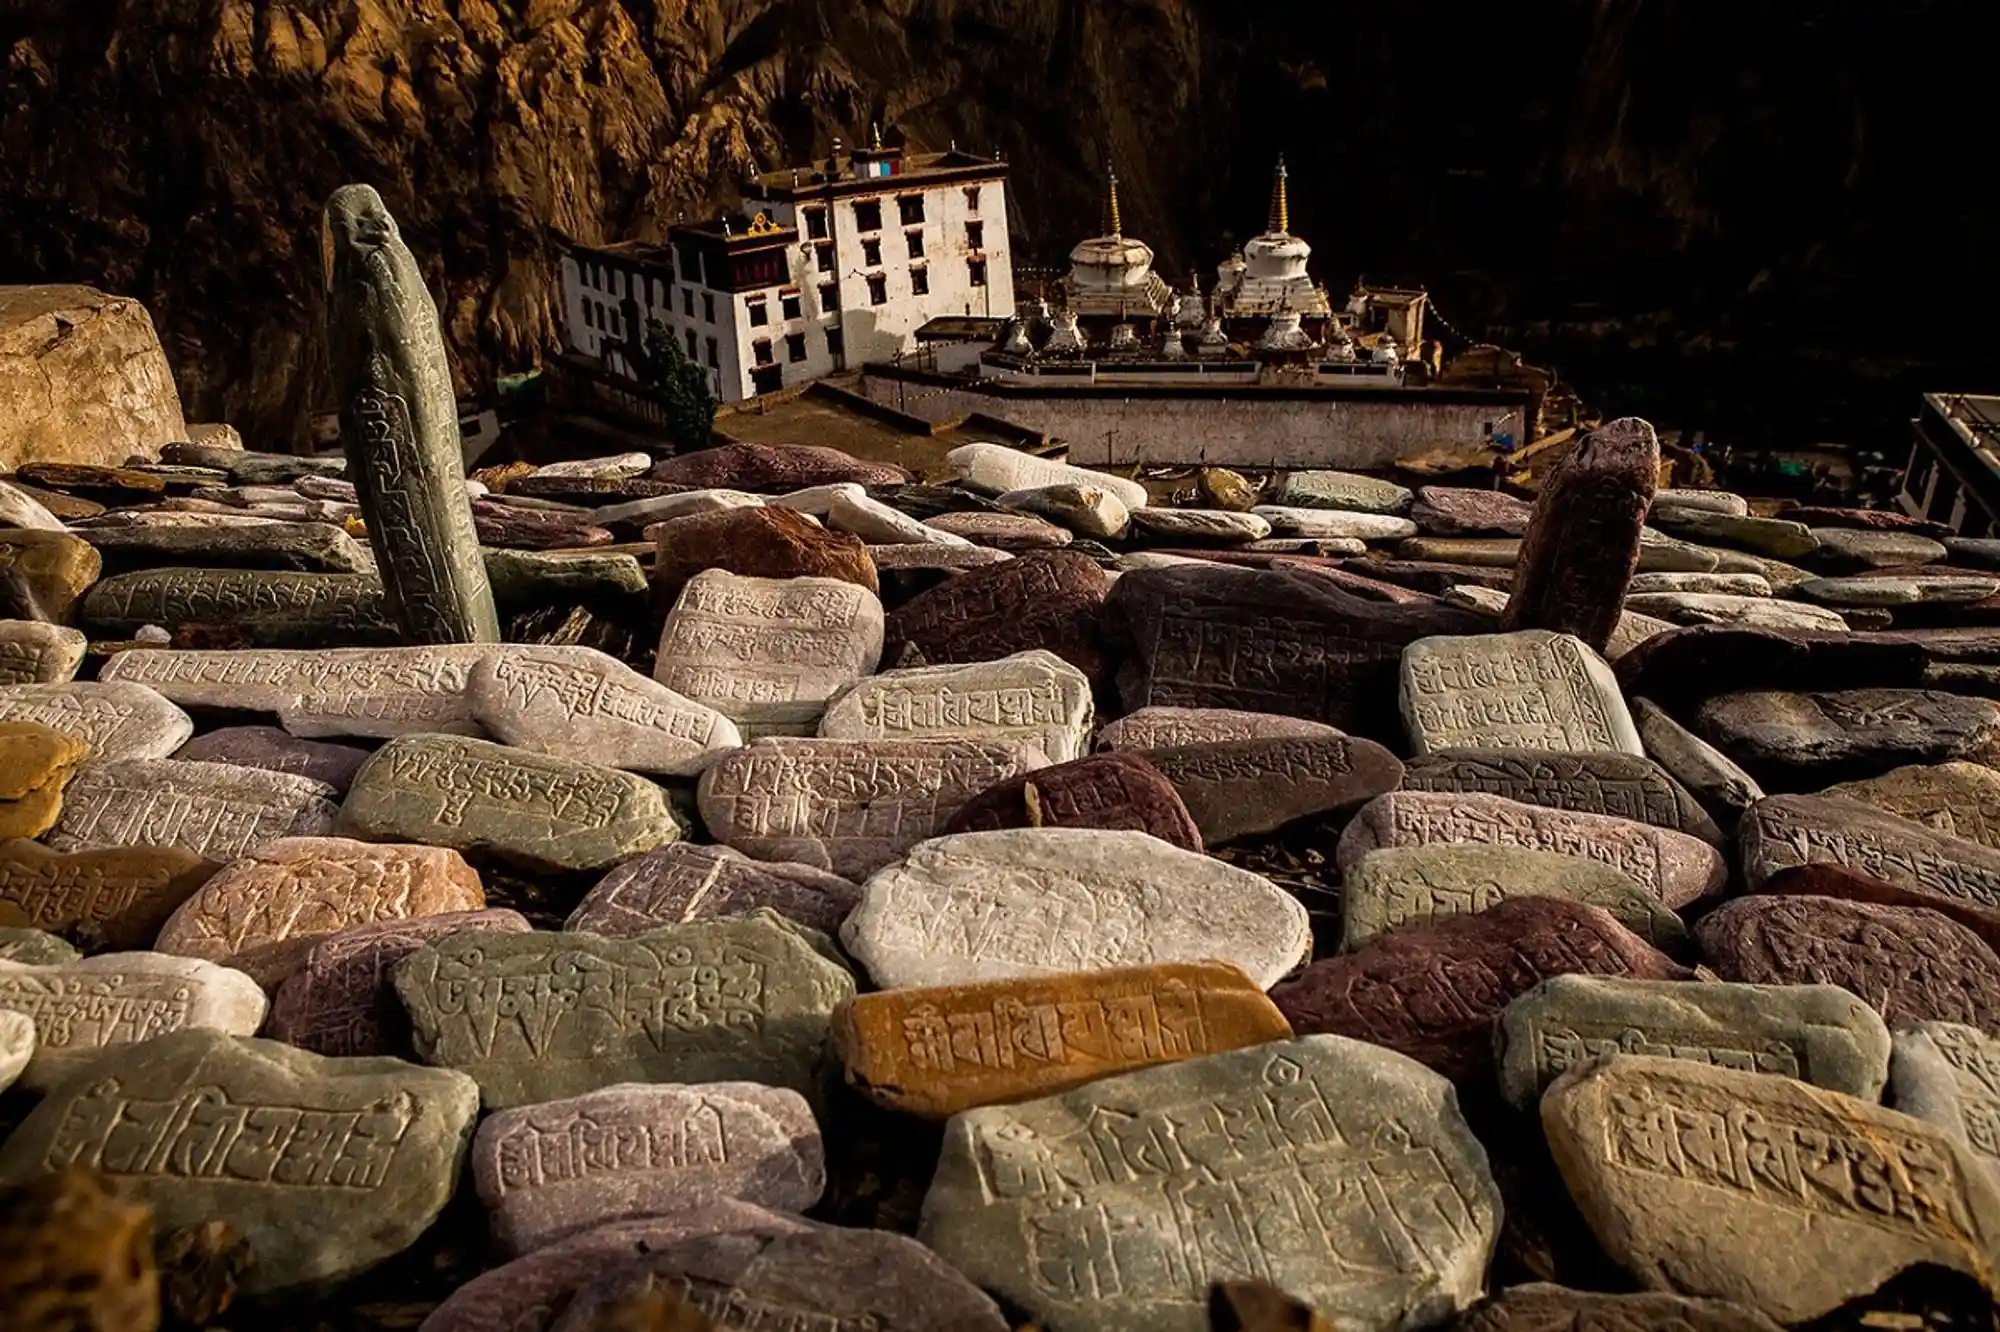 Rocks with Tibetan inscriptions; Image Source: Sandeepachetan’s Travel Blog